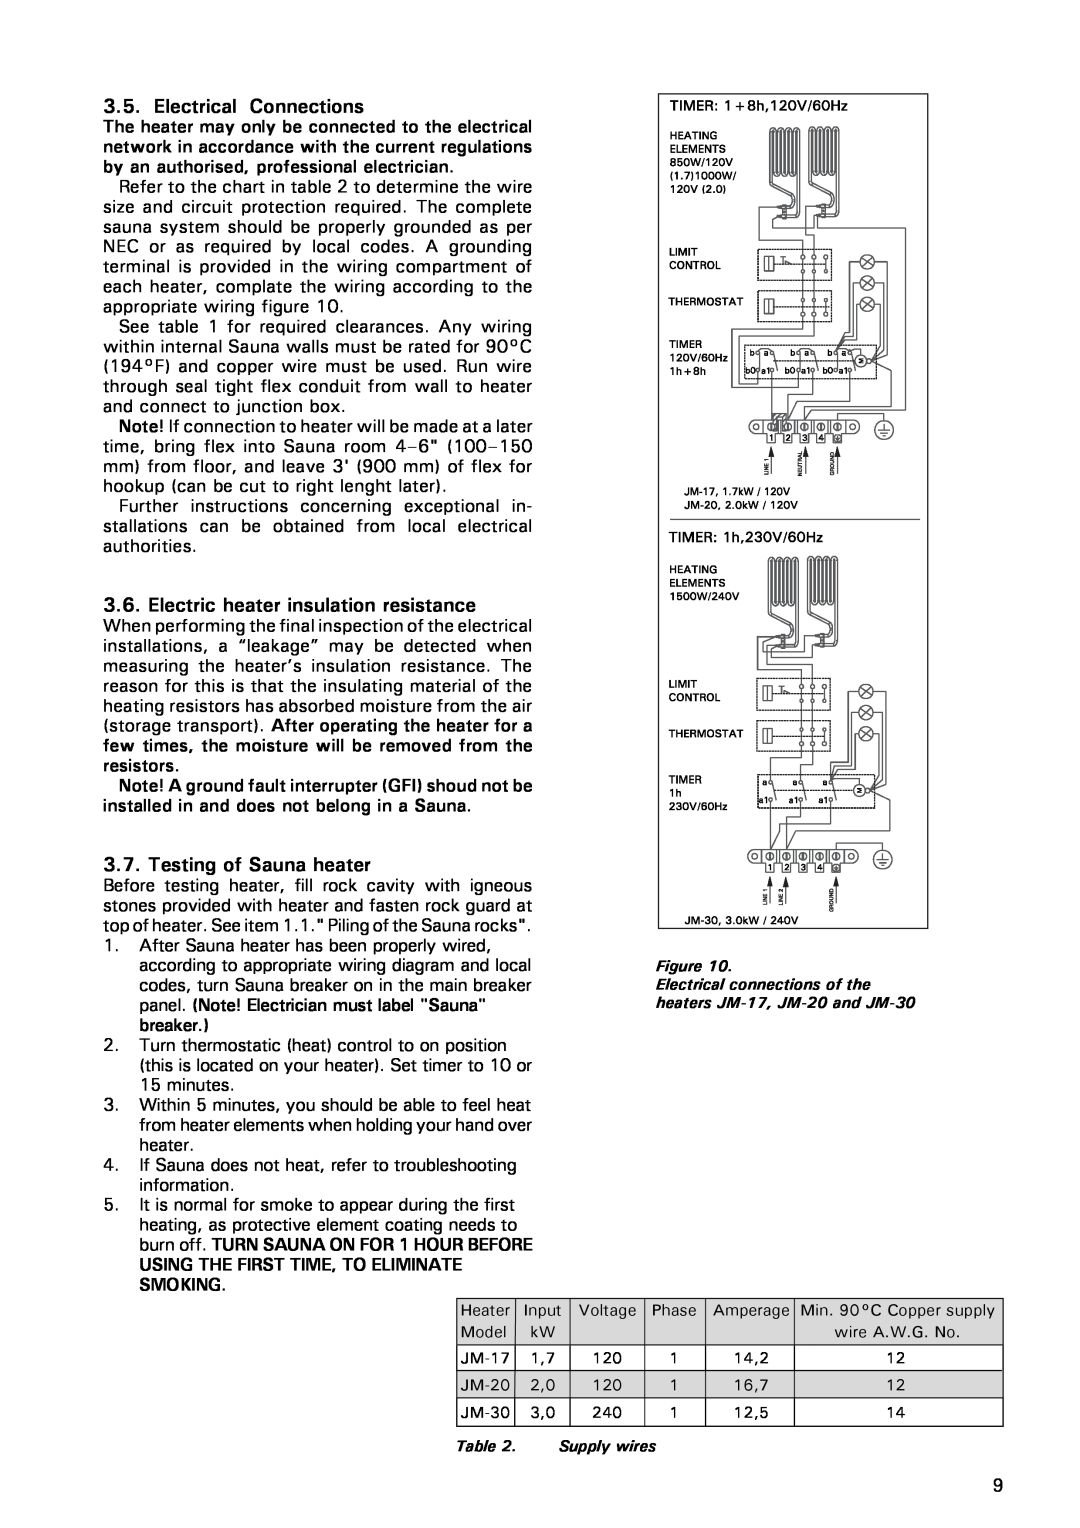 Finlandia JM-30, JM-17, JM-20 manual Electrical Connections, Electric heater insulation resistance, Testing of Sauna heater 